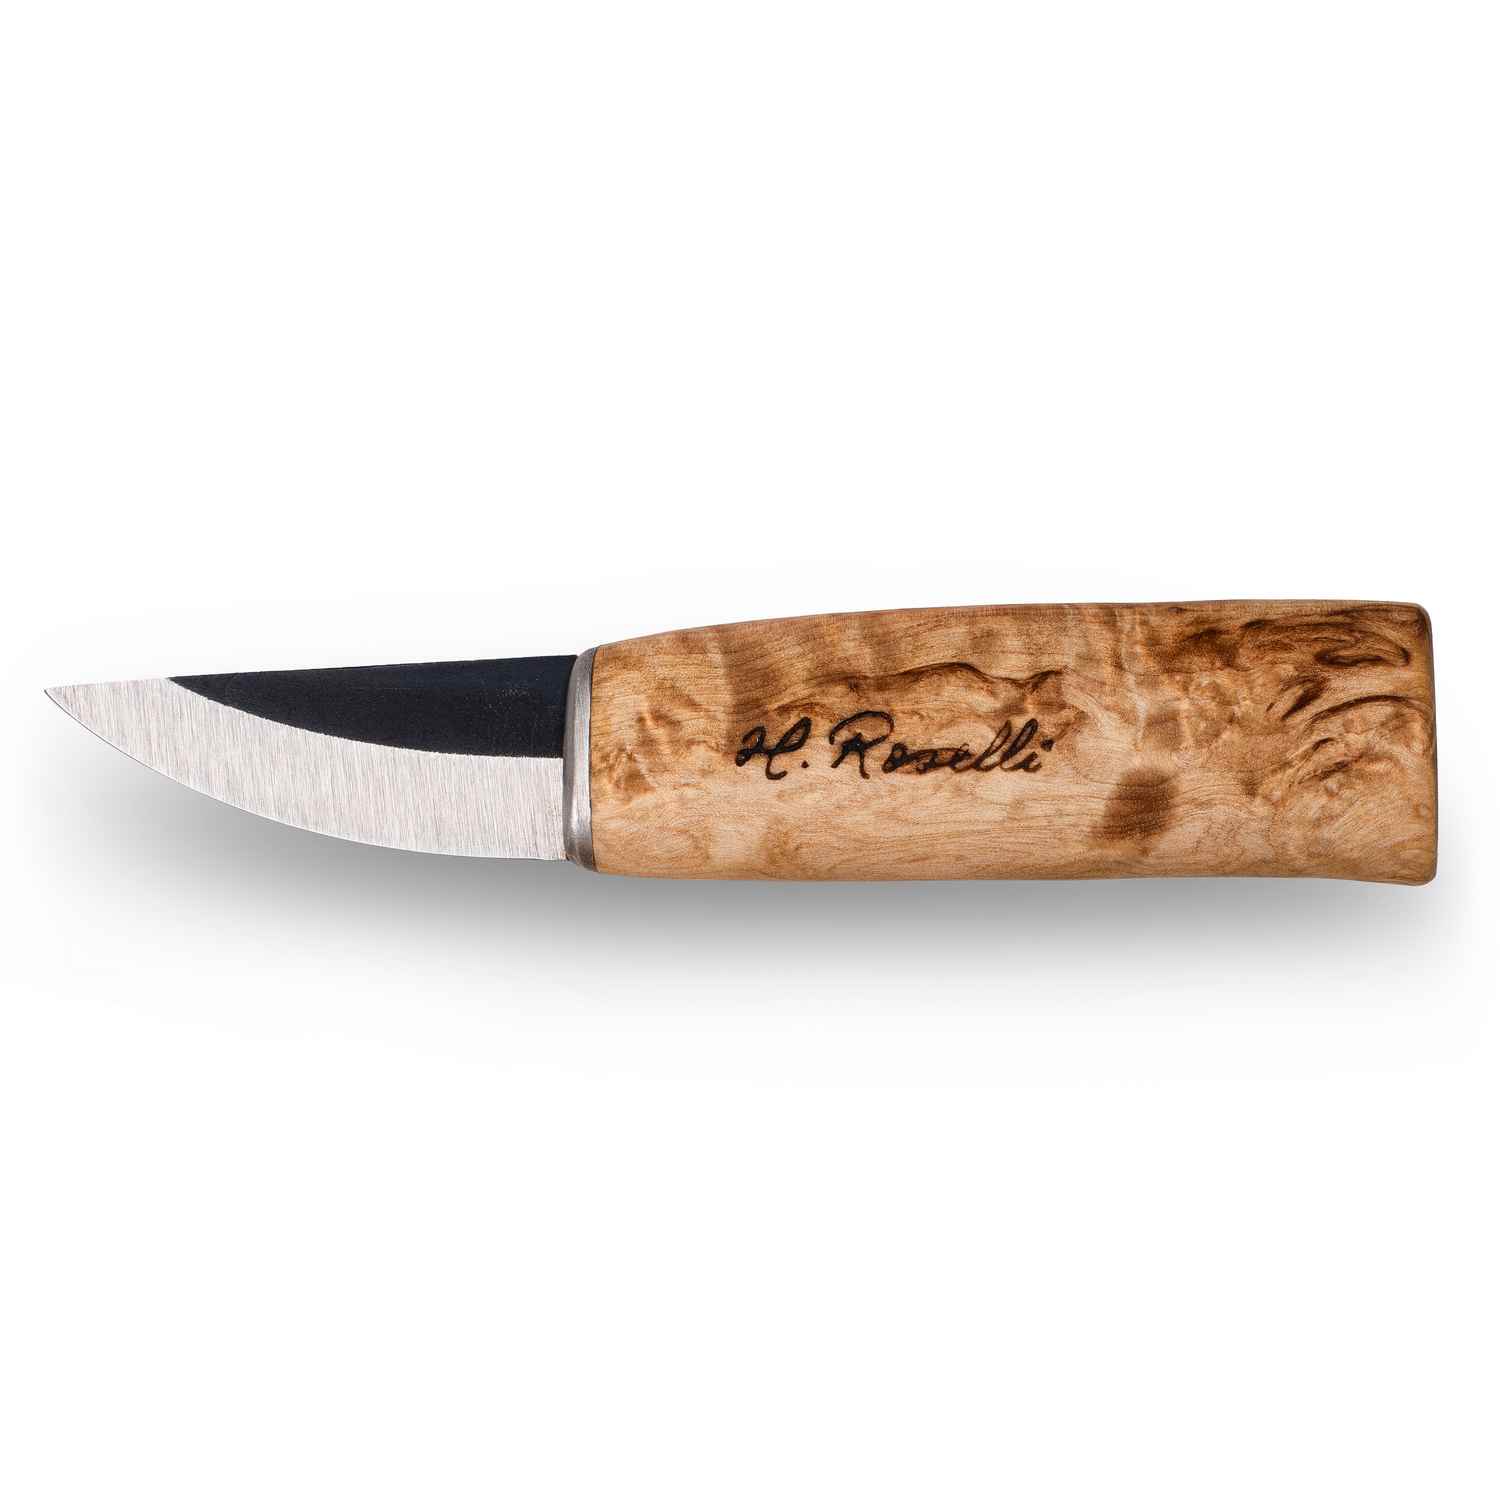 Roselli R130 "Grandmother Knife"